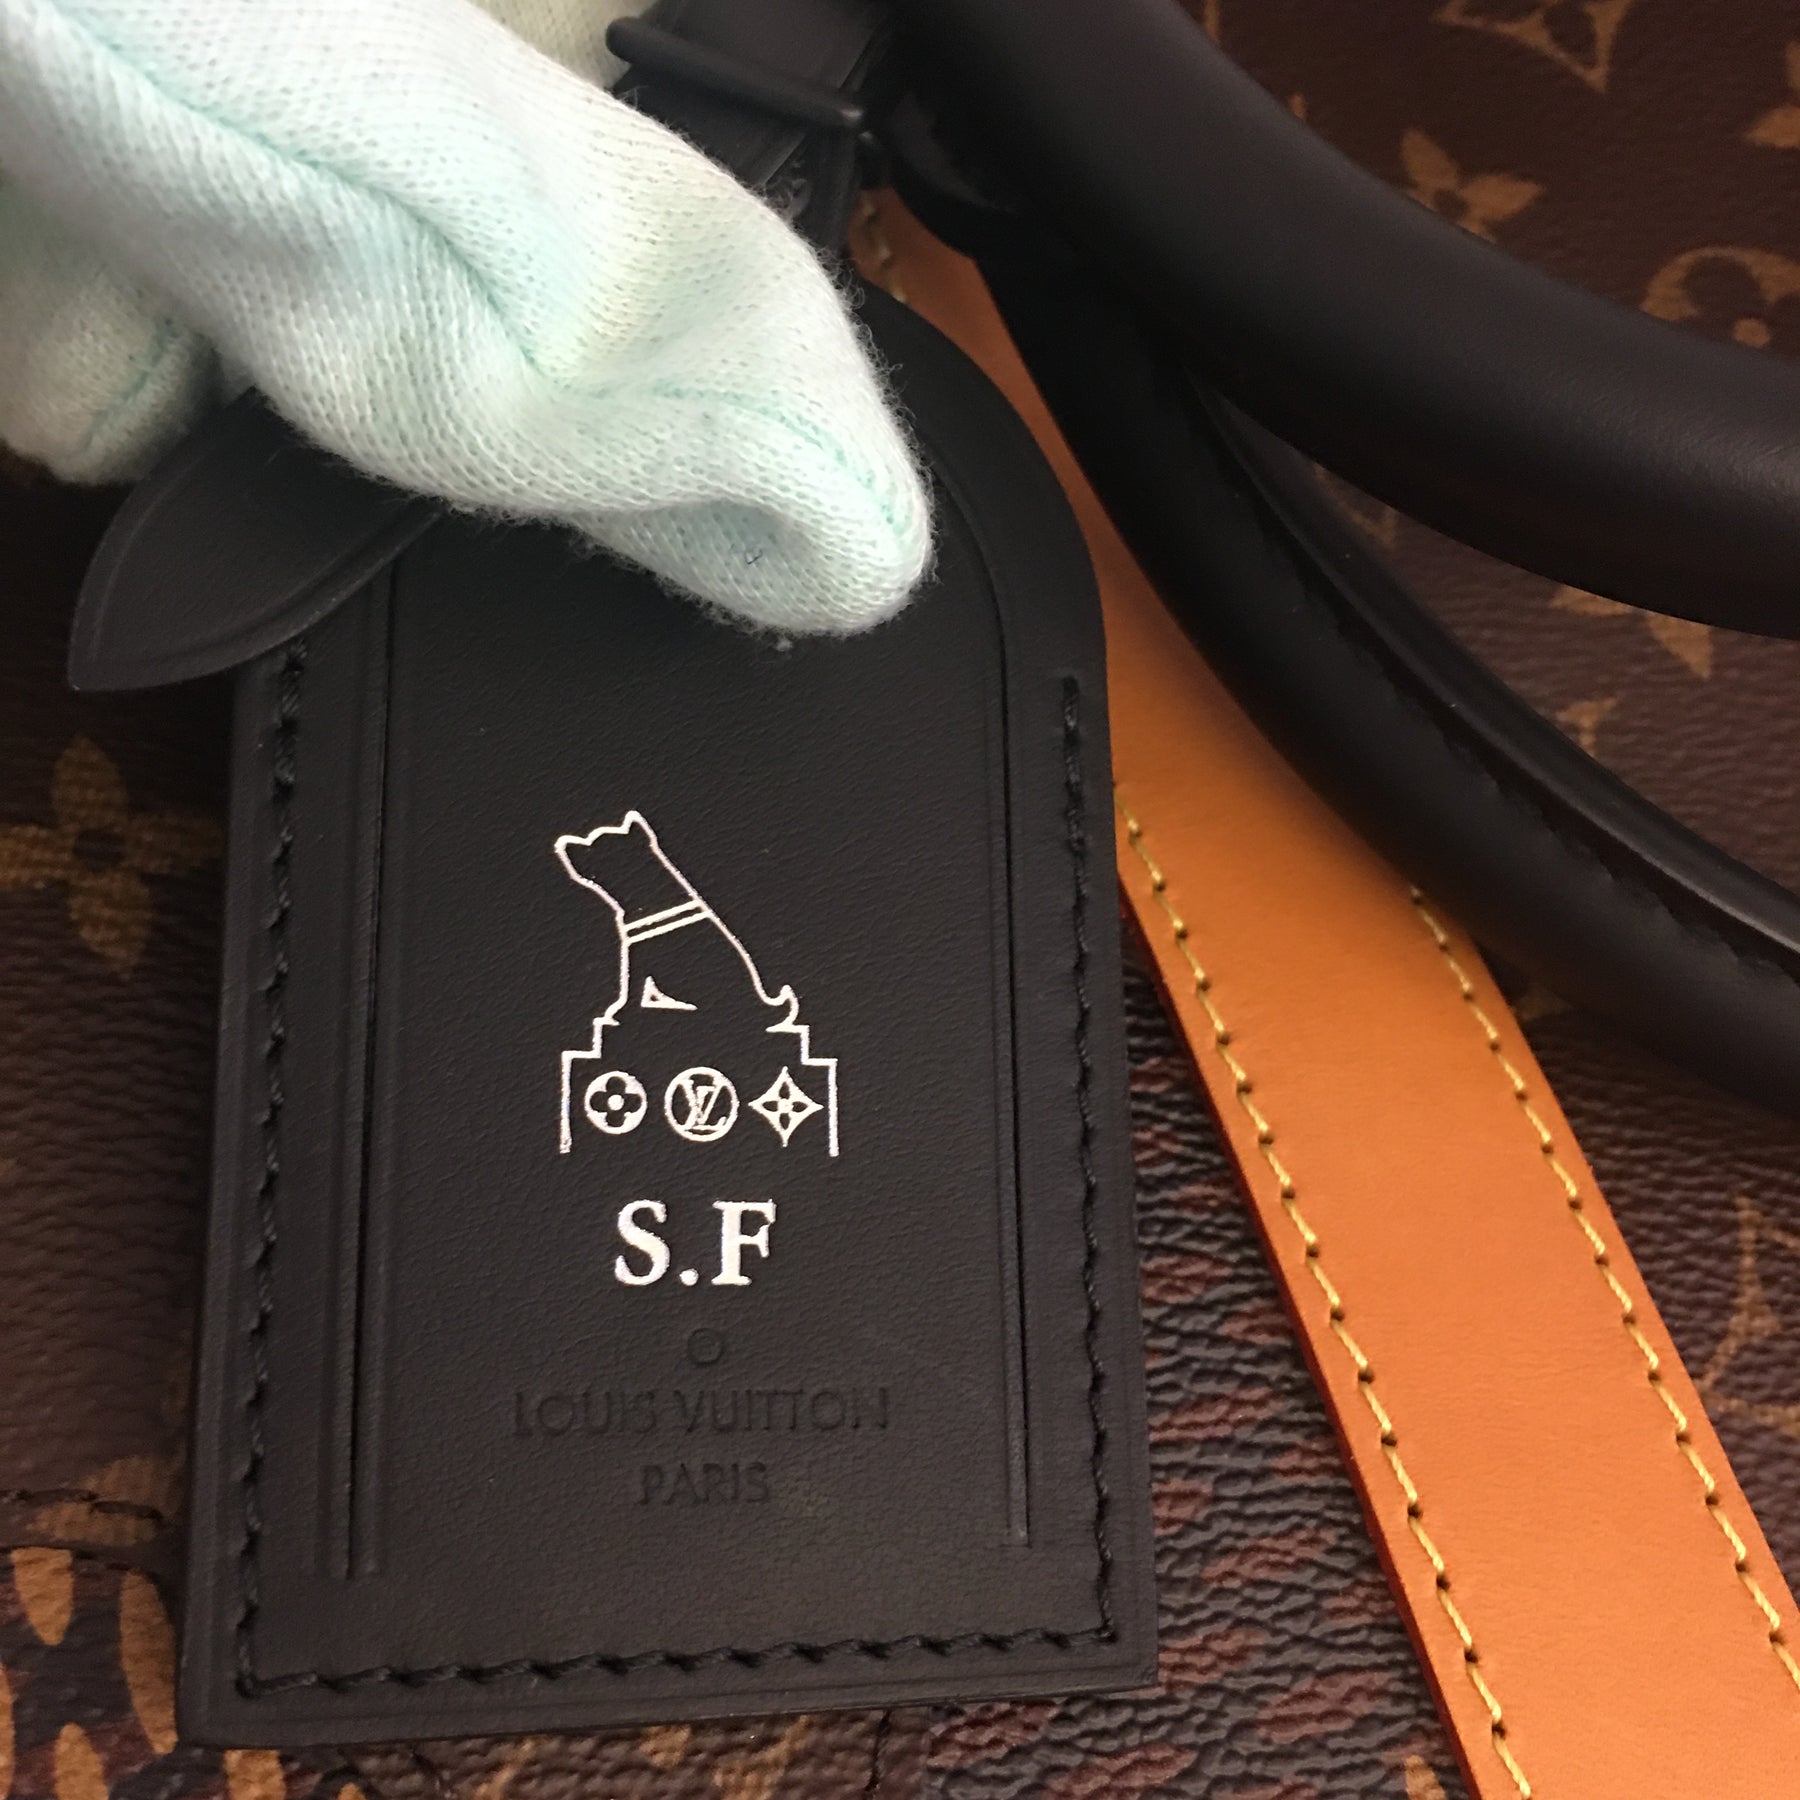 RvceShops Revival, Brown Louis Vuitton NIGO Keepall Bandouliere 60 Travel  Bag